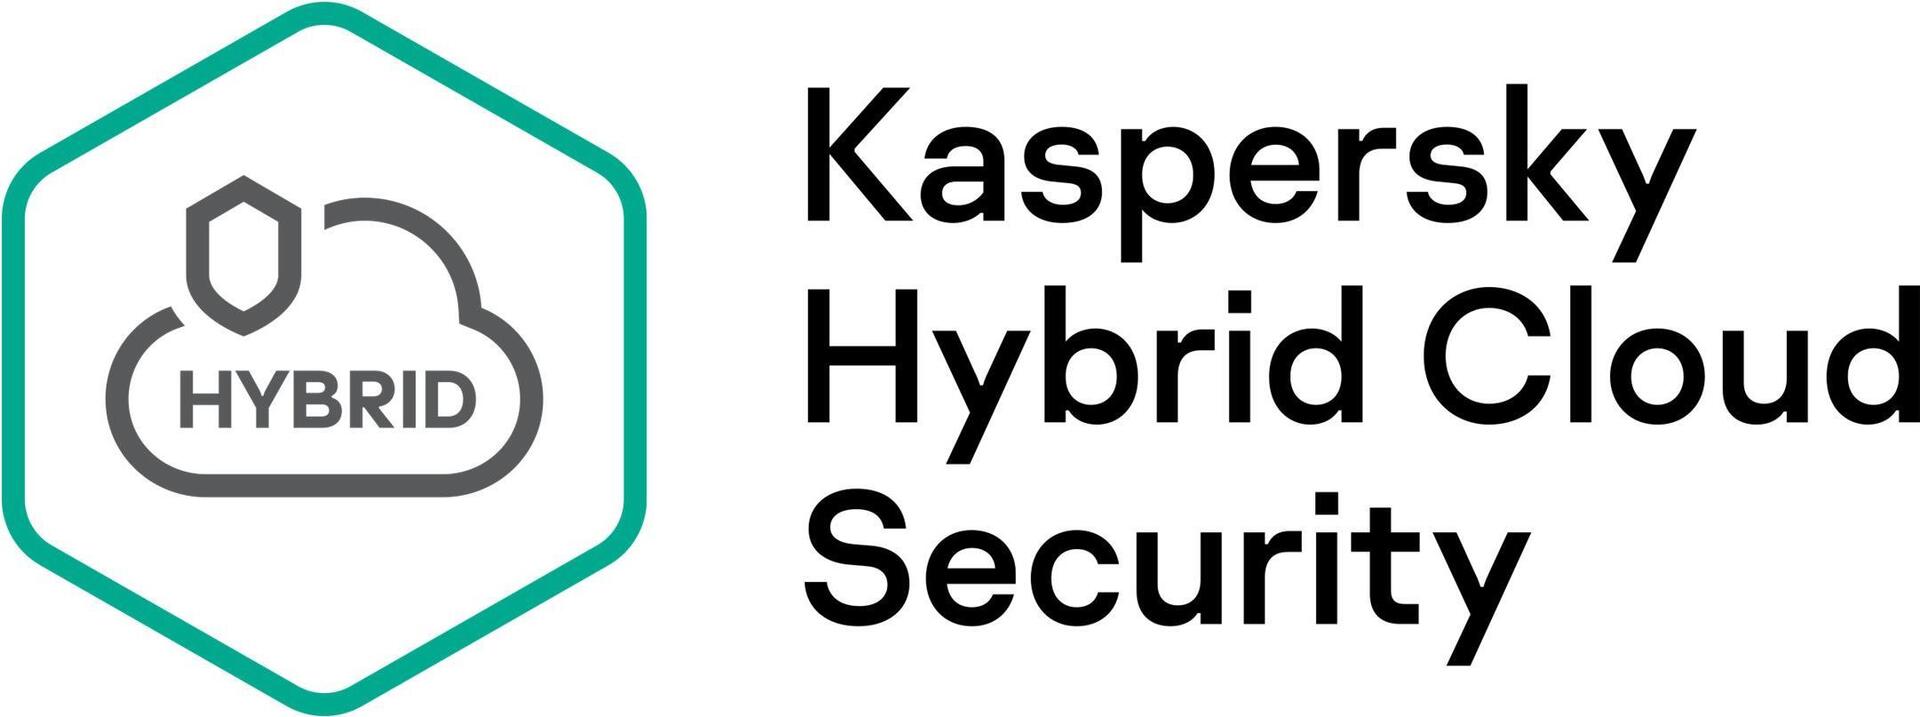 Kaspersky Hybrid Cloud Security (KL4554XAND9)